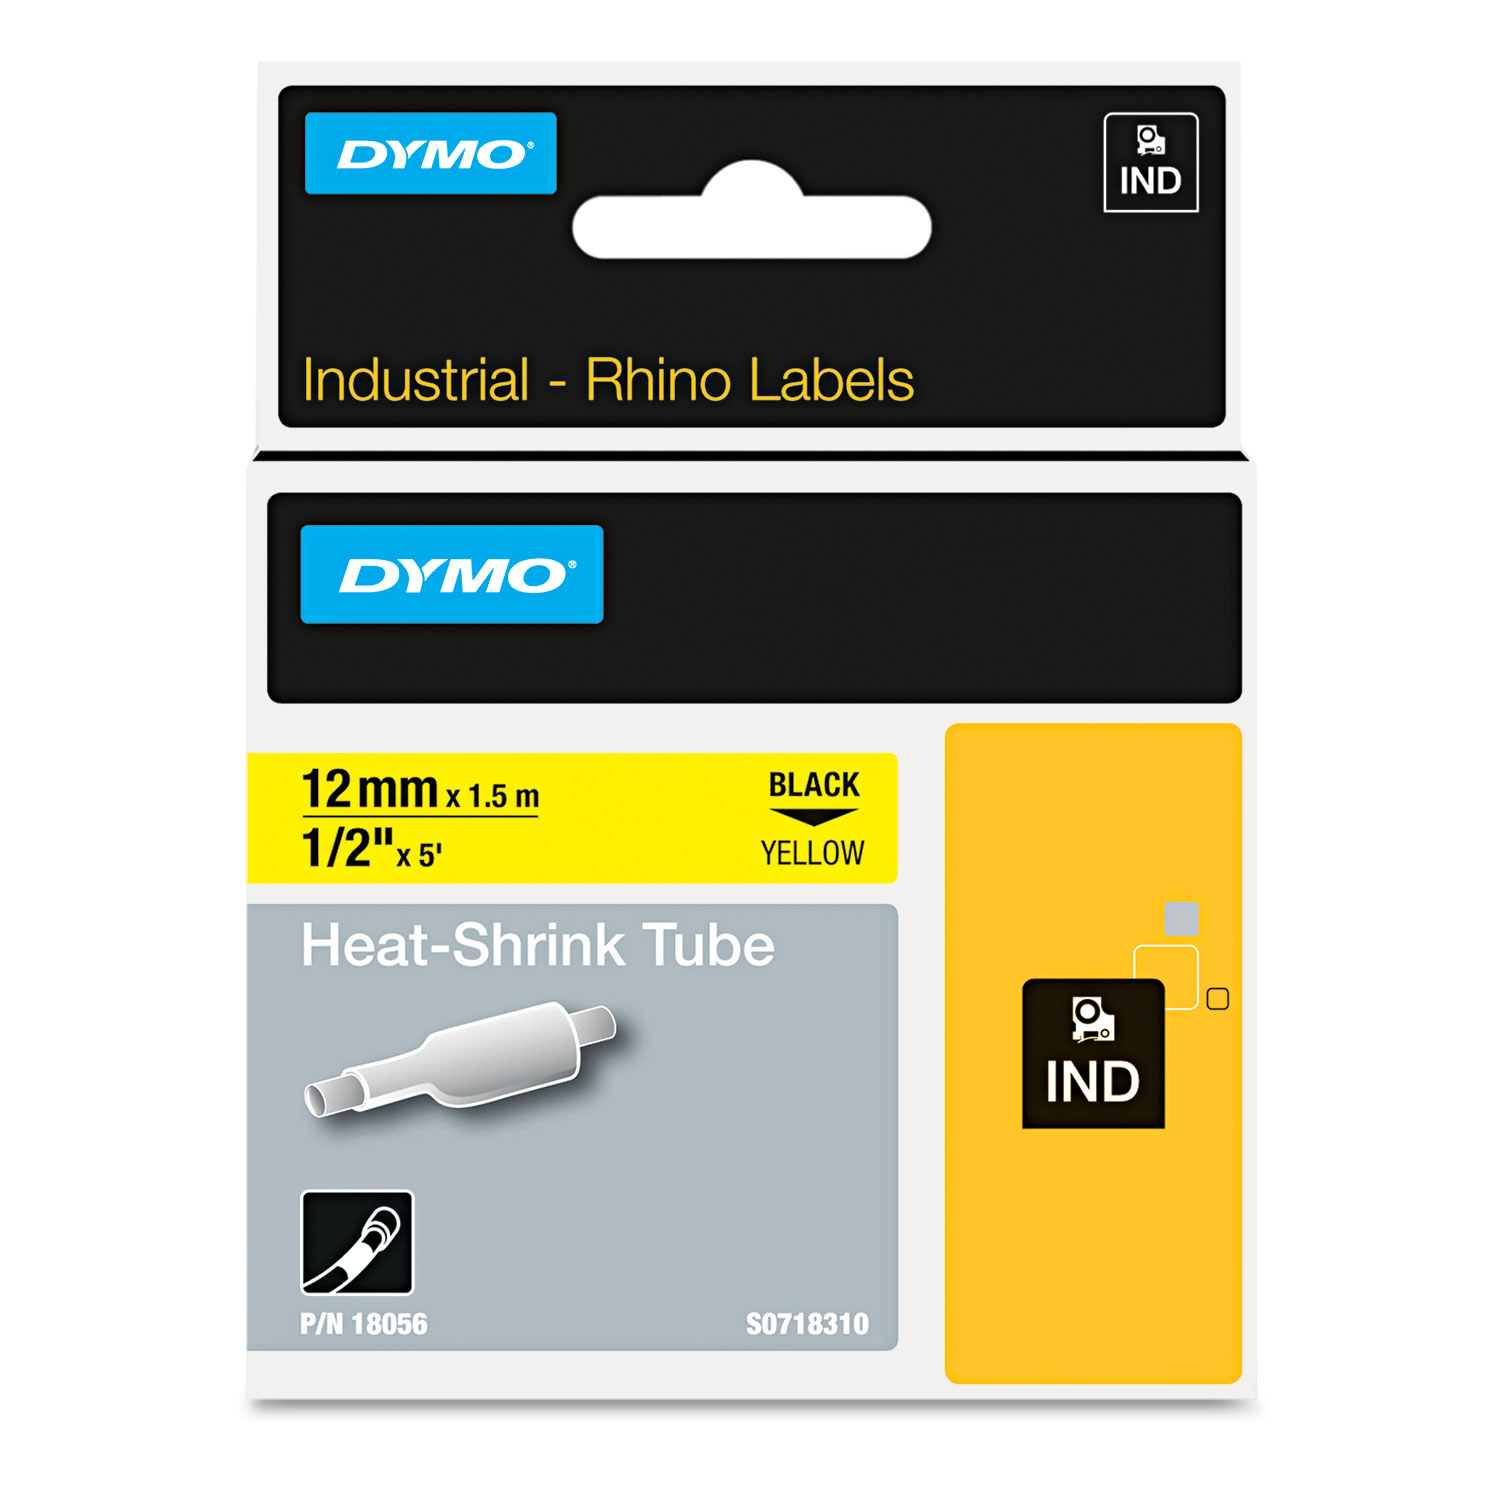  DYMO 18055 Rhino Heat Shrink Tubes Industrial Label Tape, 0.5 x 5 ft, White/Black Print (DYM18055) 